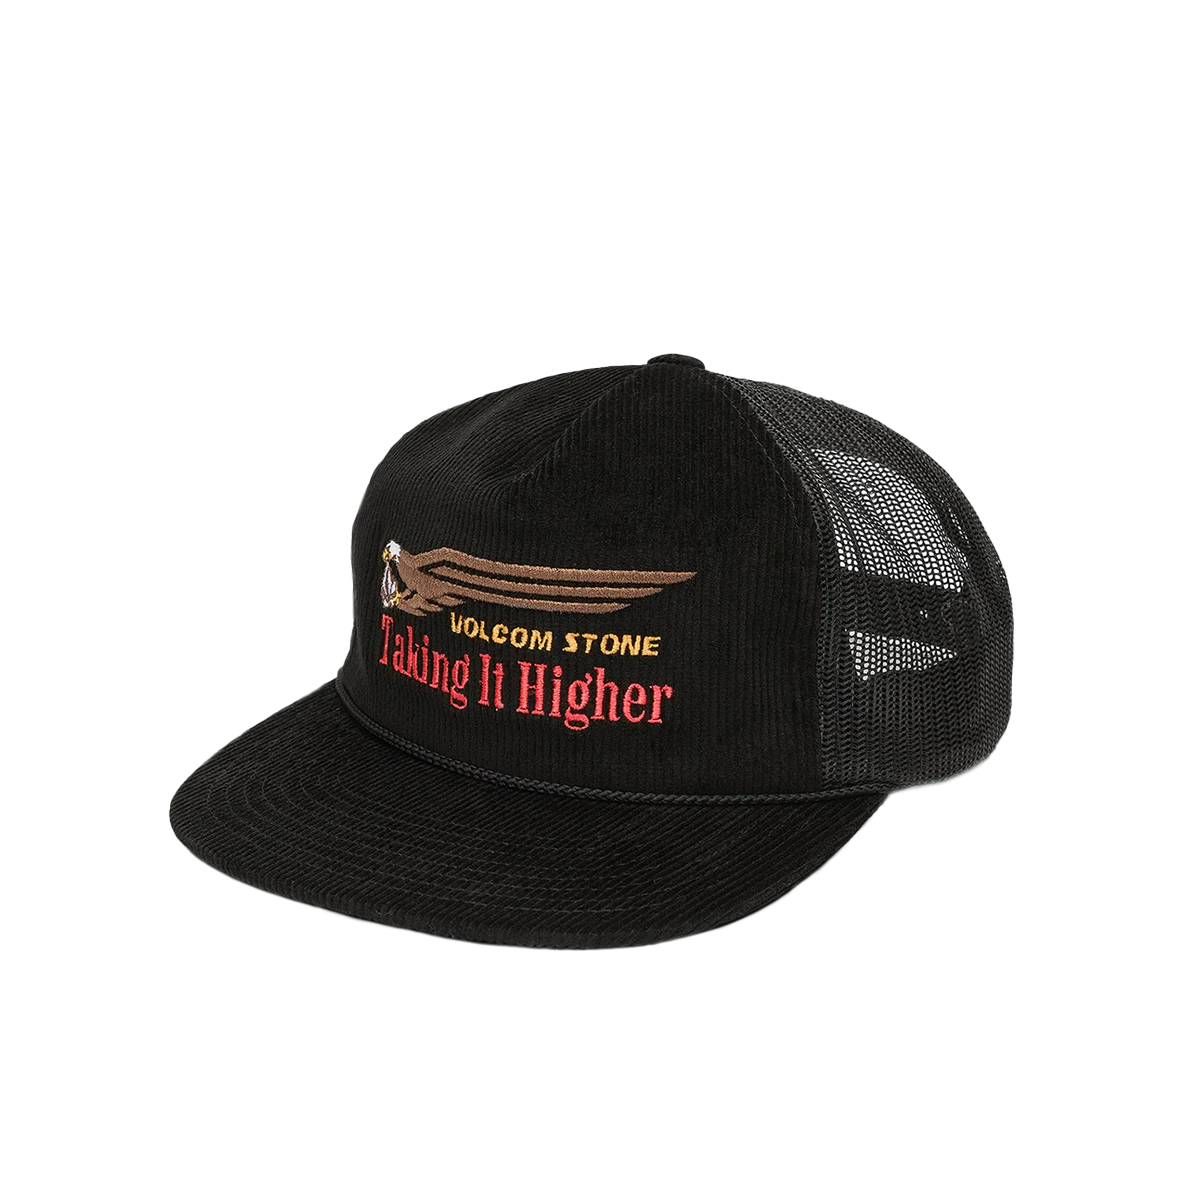 Volcom Taking It Higher Trucker Hat - Black